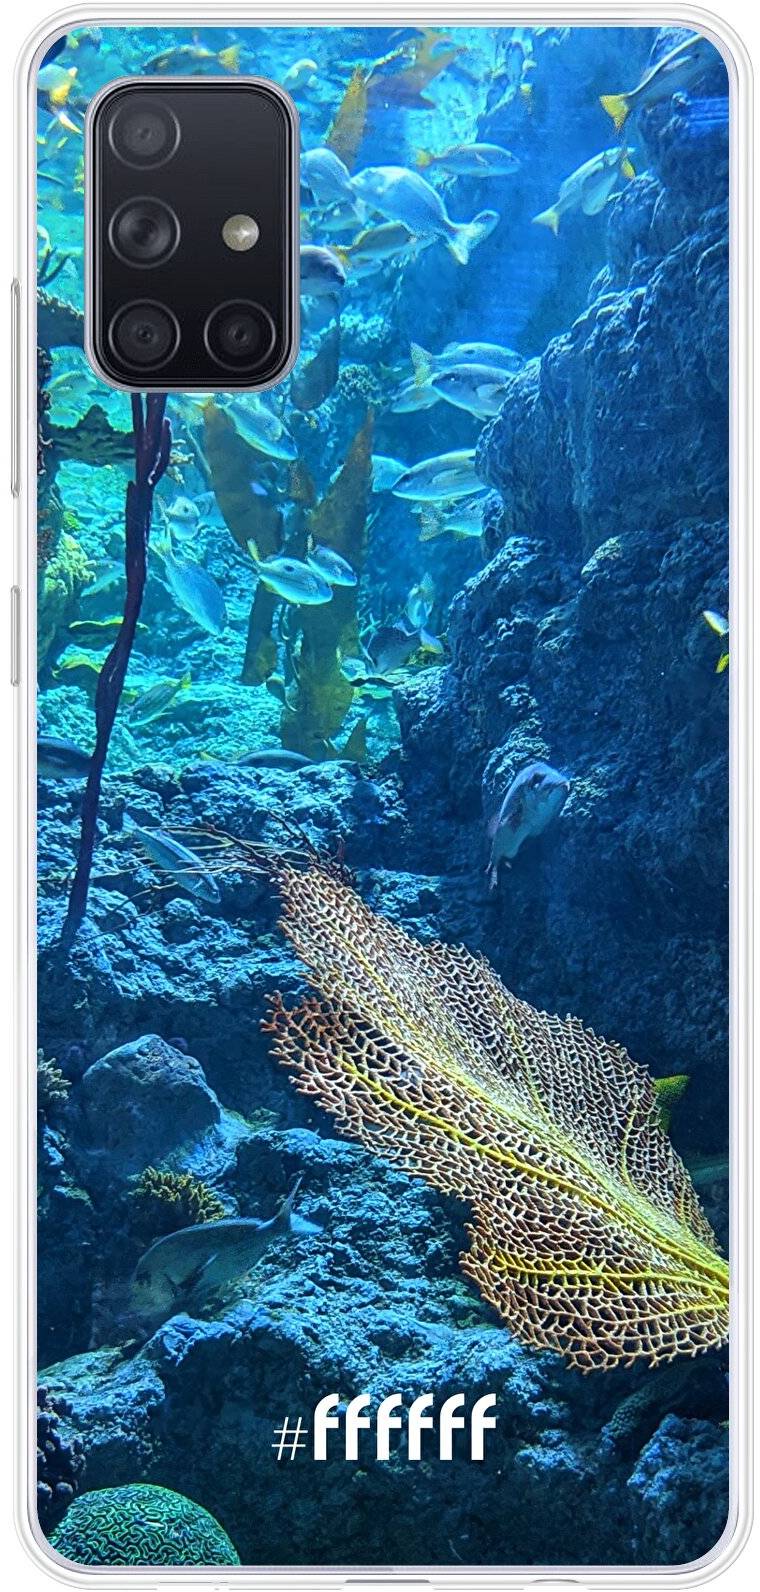 Coral Reef Galaxy A71